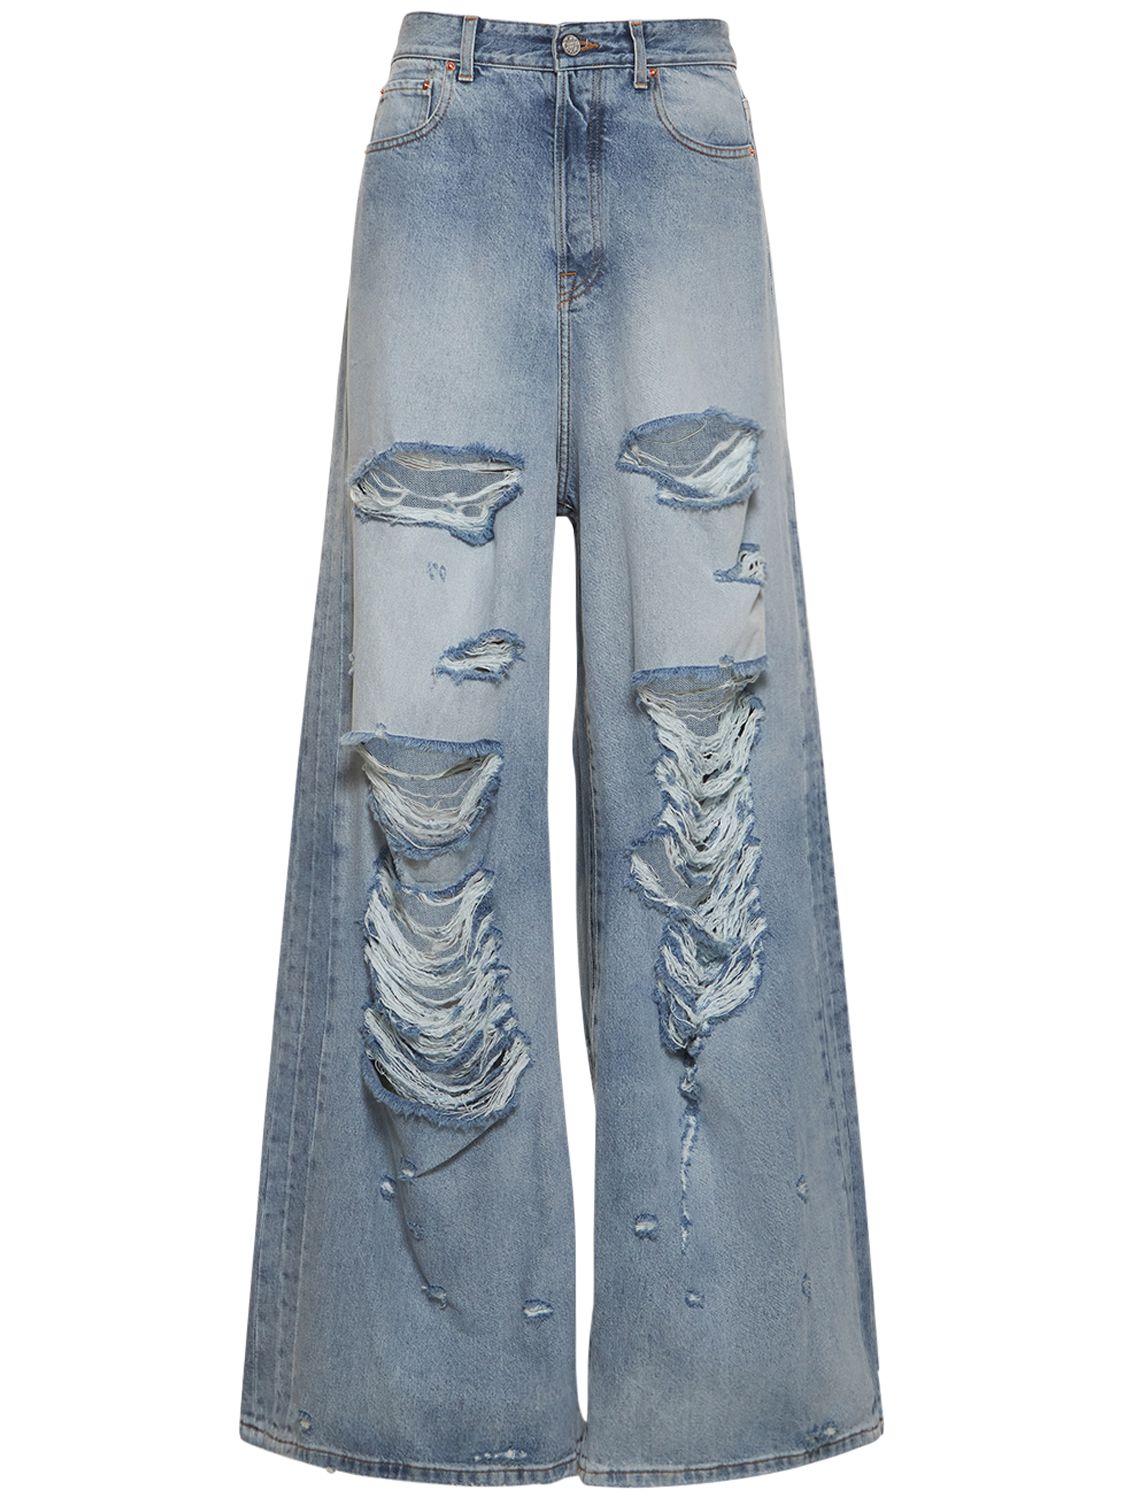 JCAESAR Scratched jeans ワイドデニム デザインbeautybeast